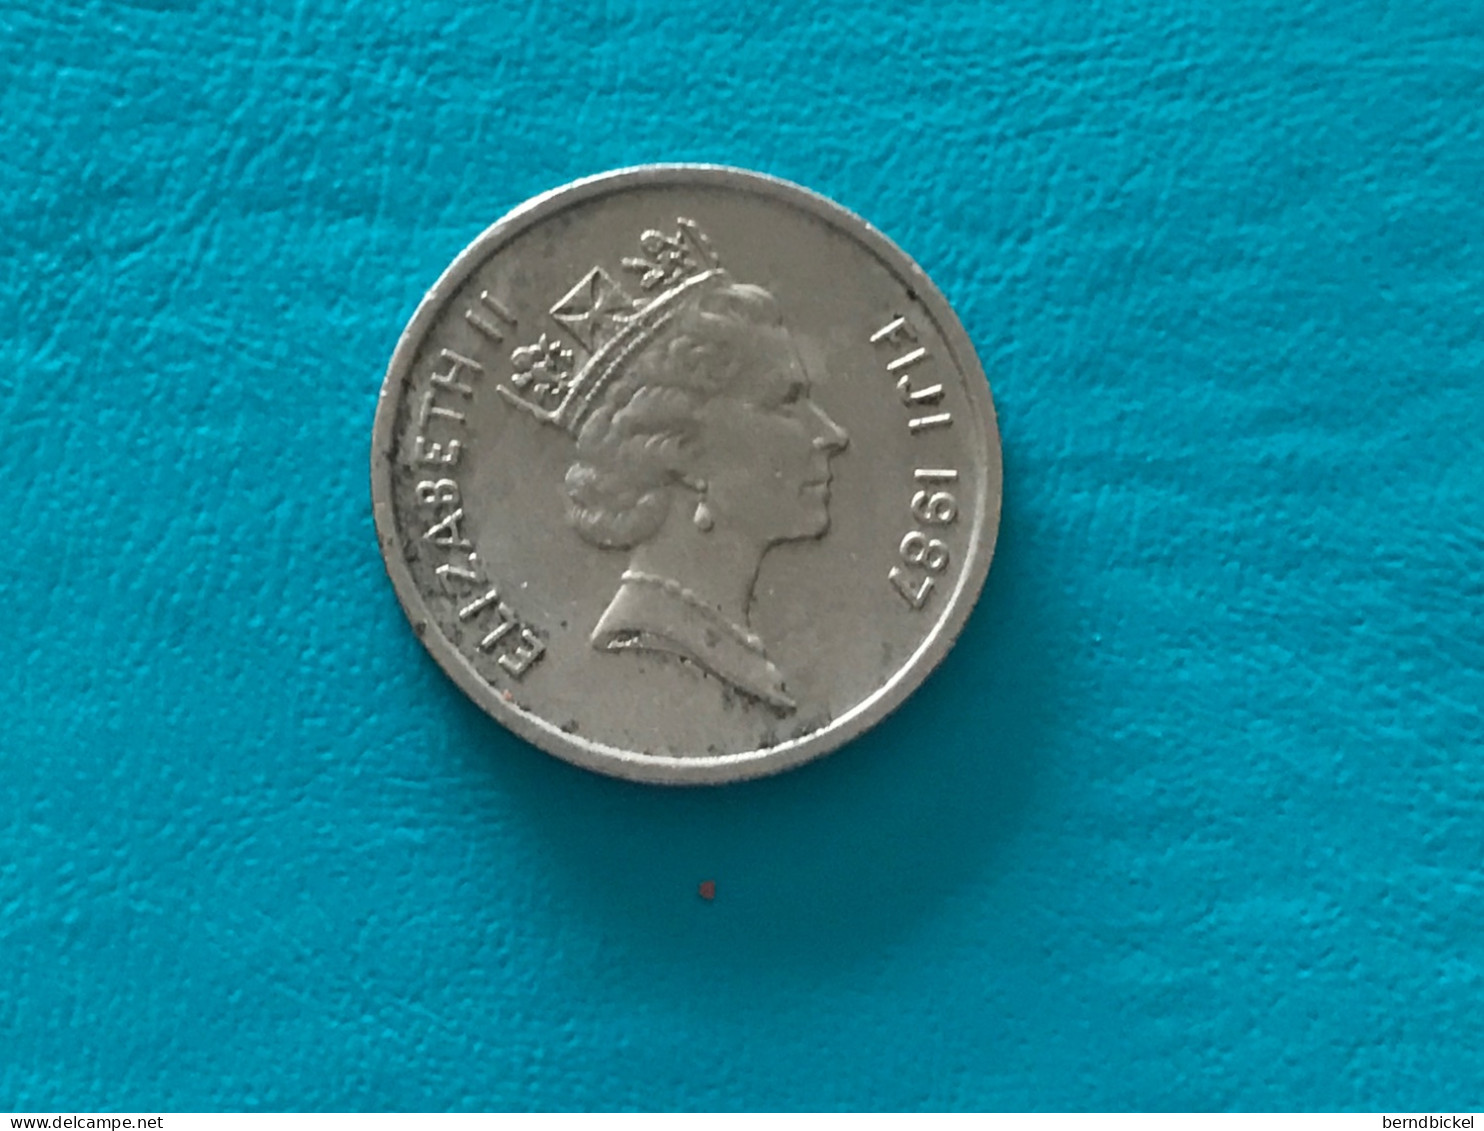 Münze Münzen Umlaufmünze Fiji 5 Cent 1987 - Fidji